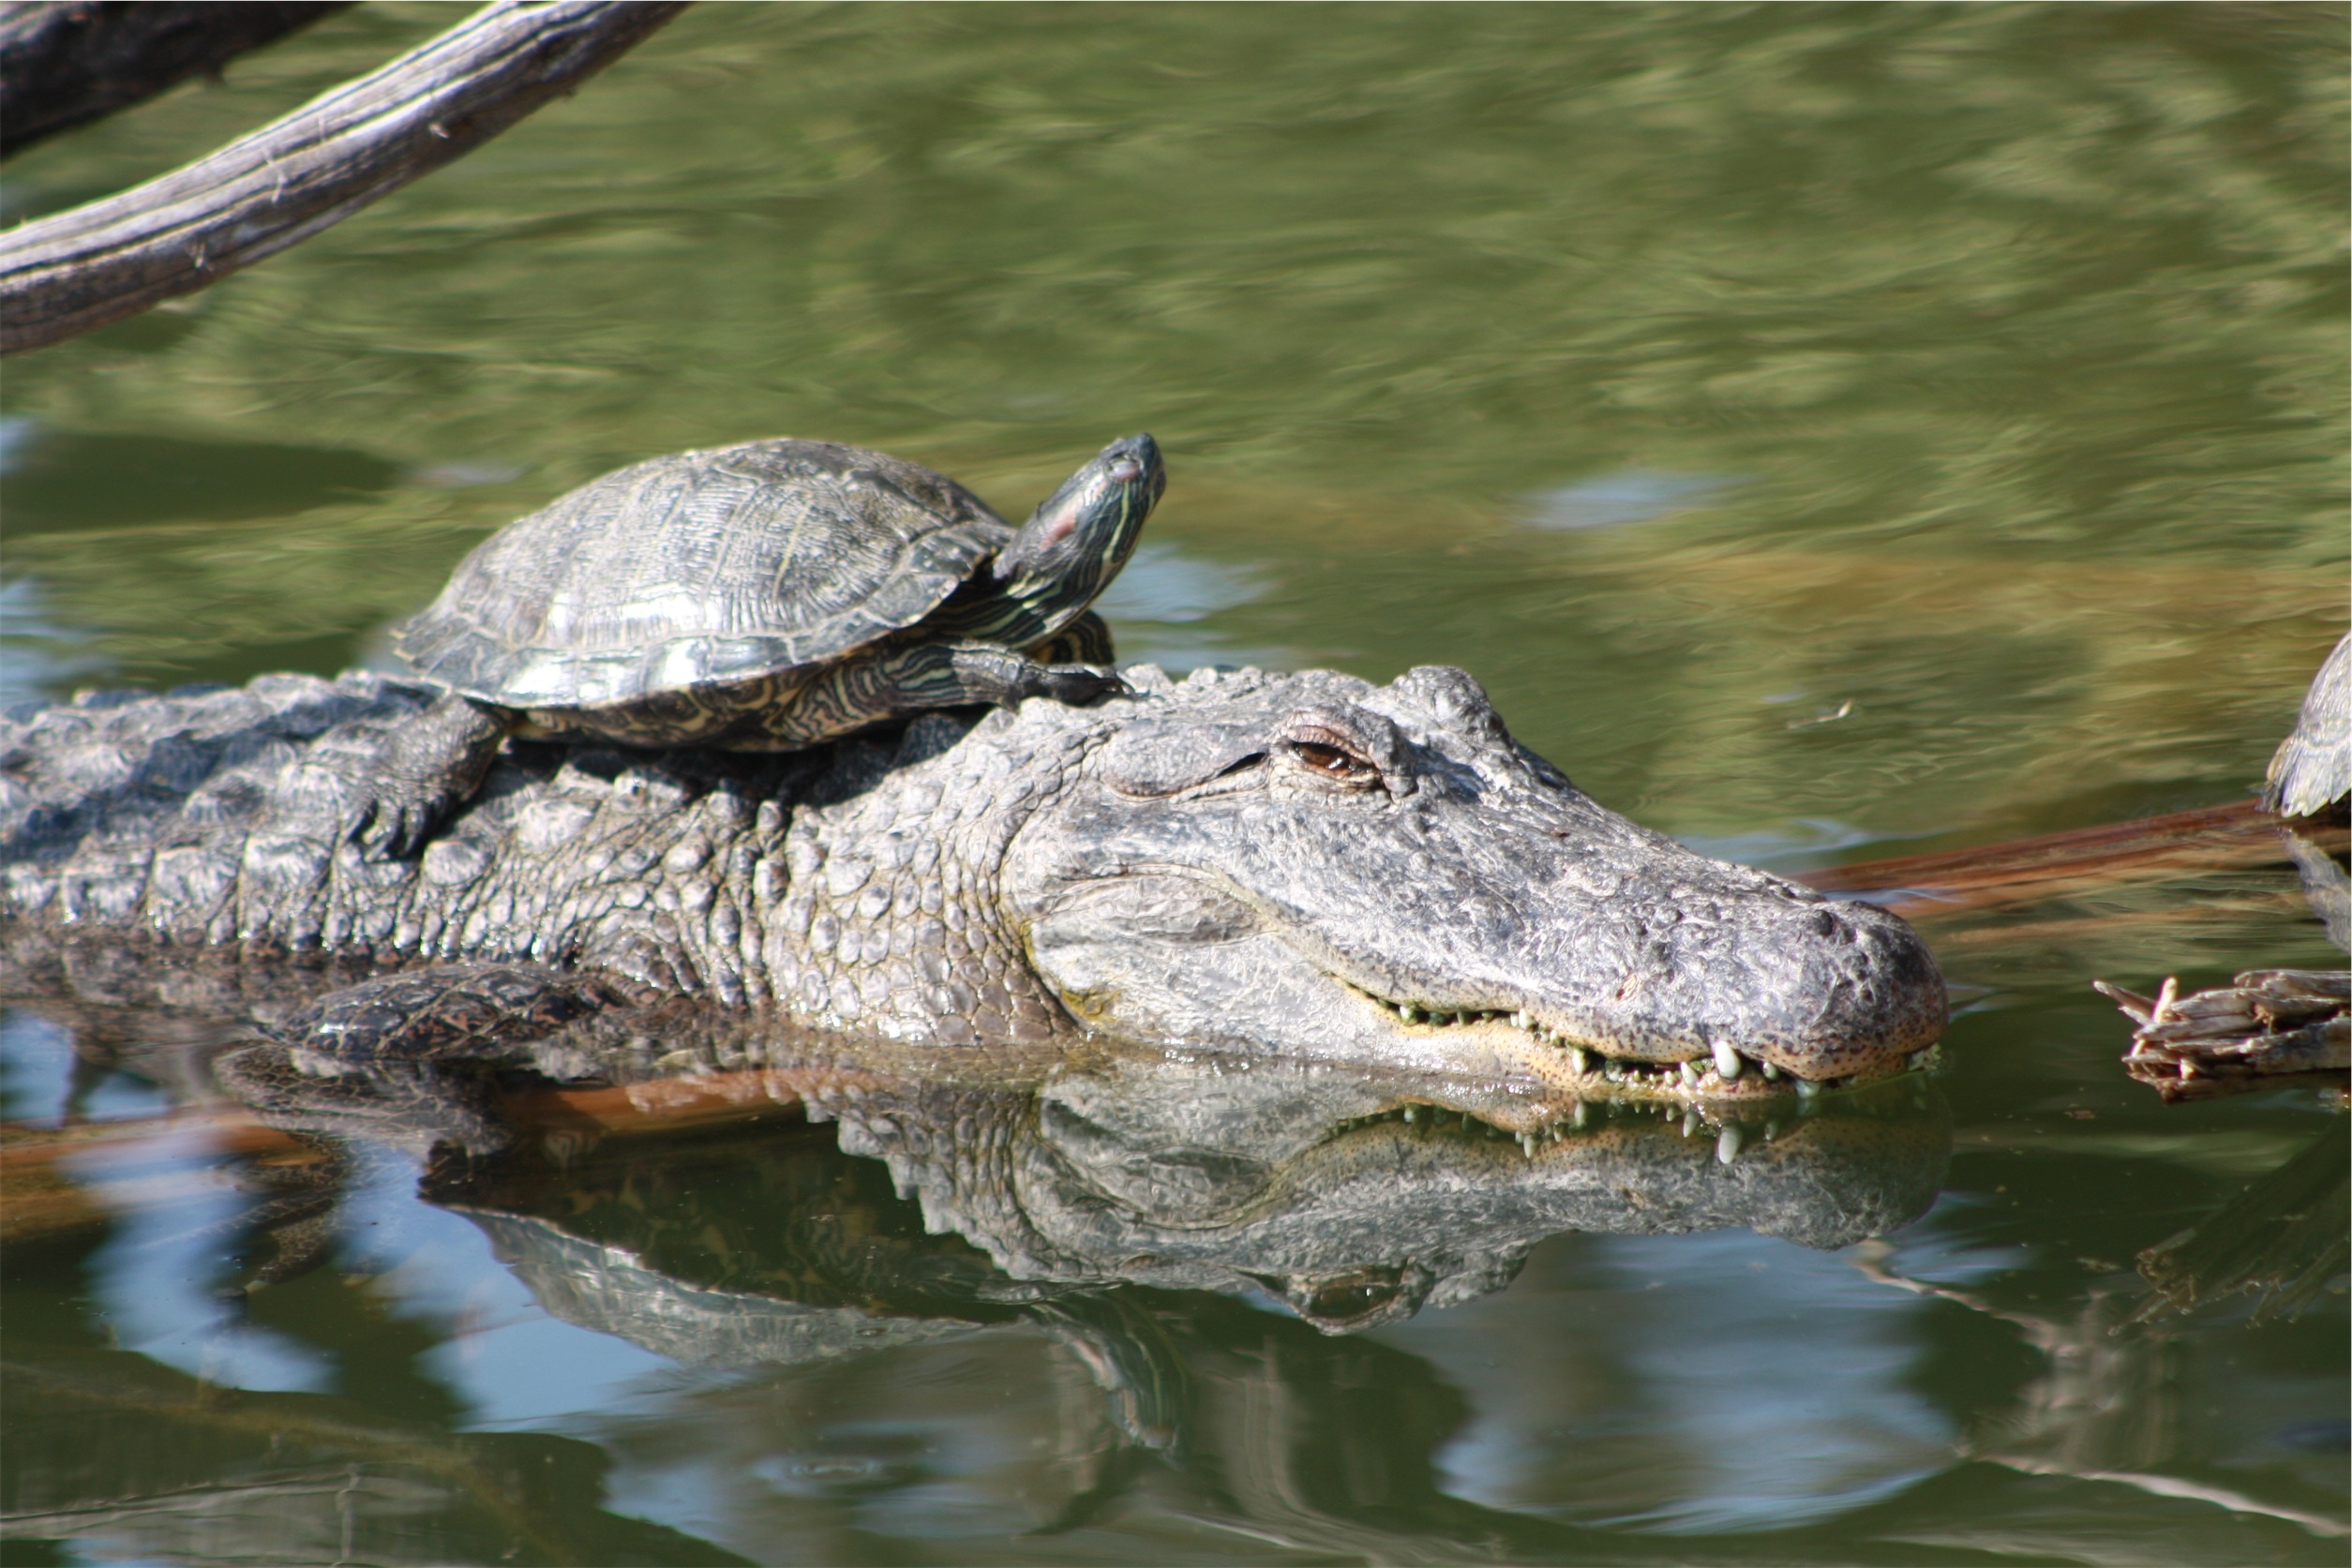 gray crocodile and brown and black turtle